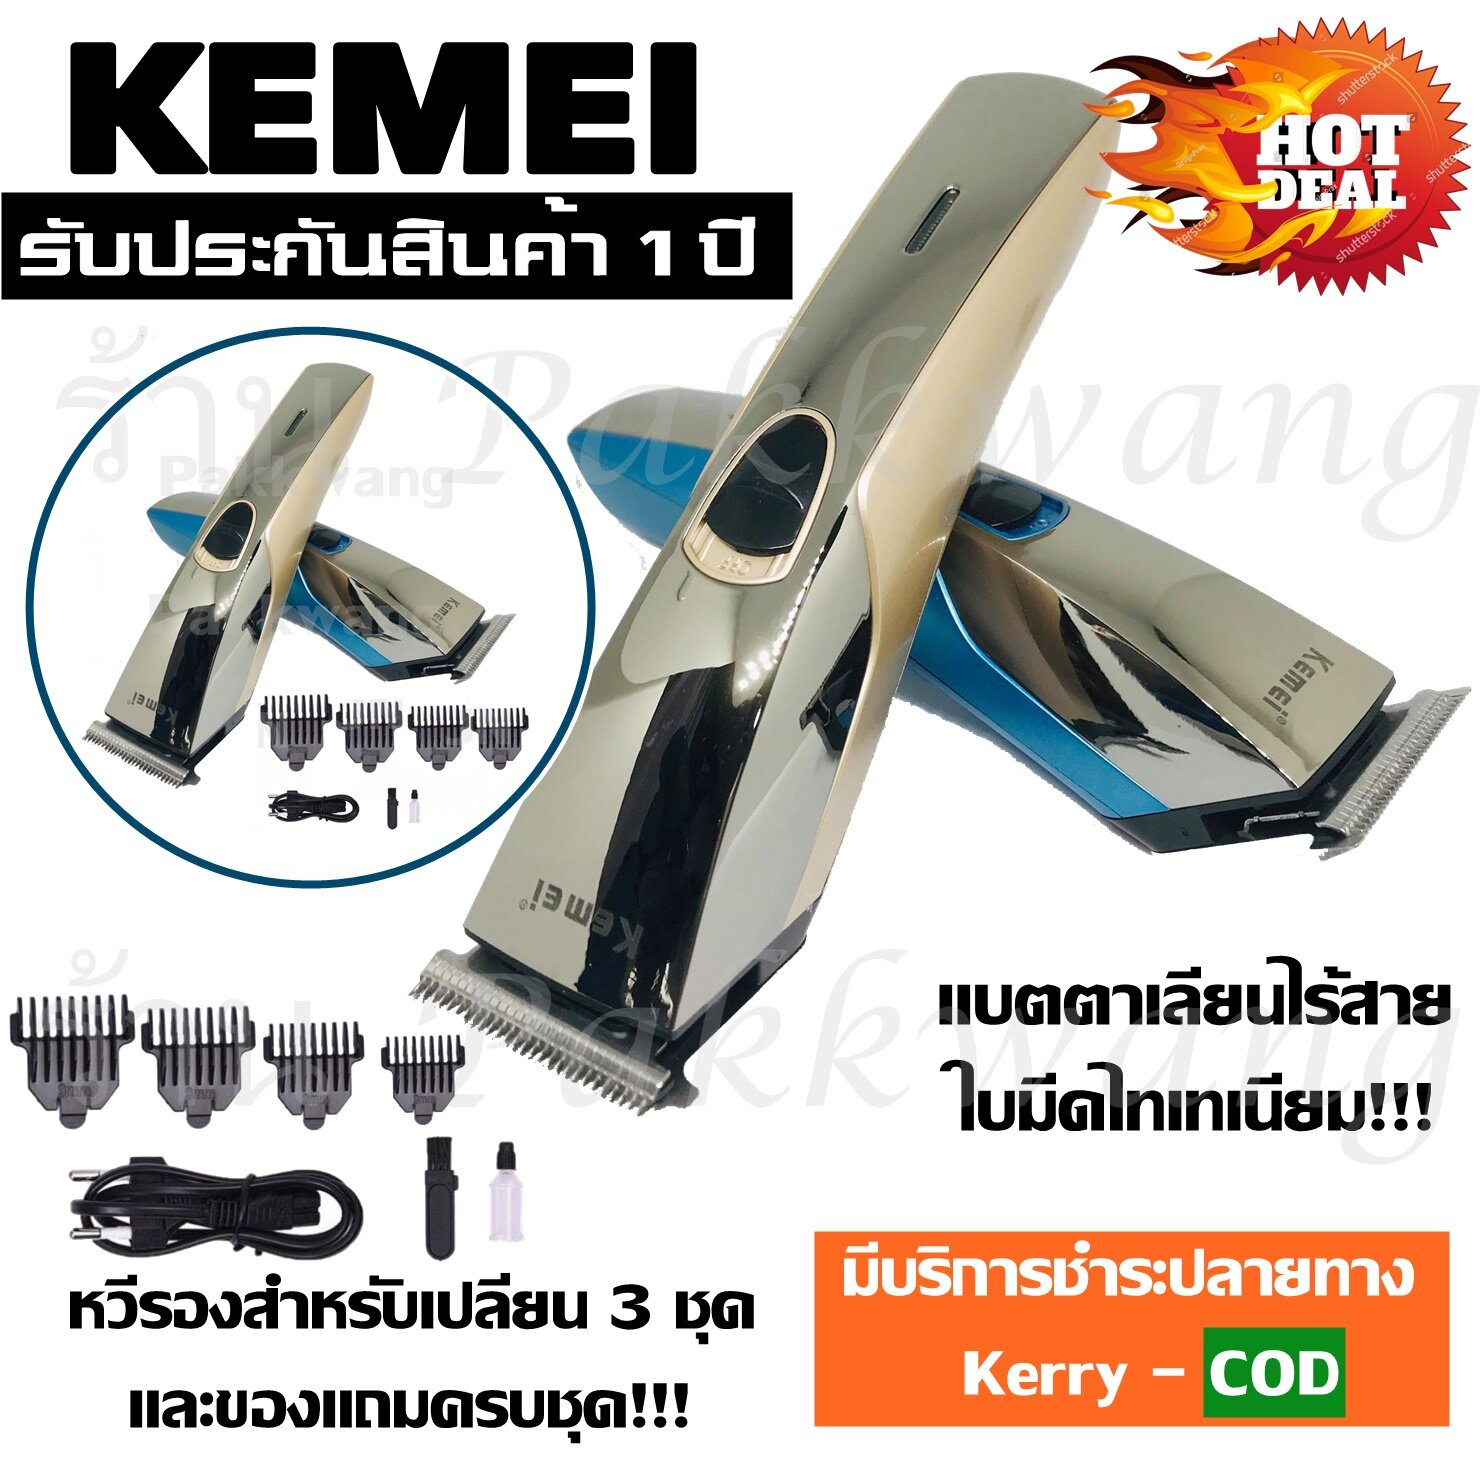 Best Flashlight ส่งด่วน (ใหม่ล่าสุด!!) Kemei KM032 KM-032 KM723 KM720 KM025 ปัตตาเลี่ยนตัดผม แบตตาเลียนตัดผม Clipper Trimmer แบบชาร์จไฟฟ้า Clipper เครื่องโกนหนวด กันจอน